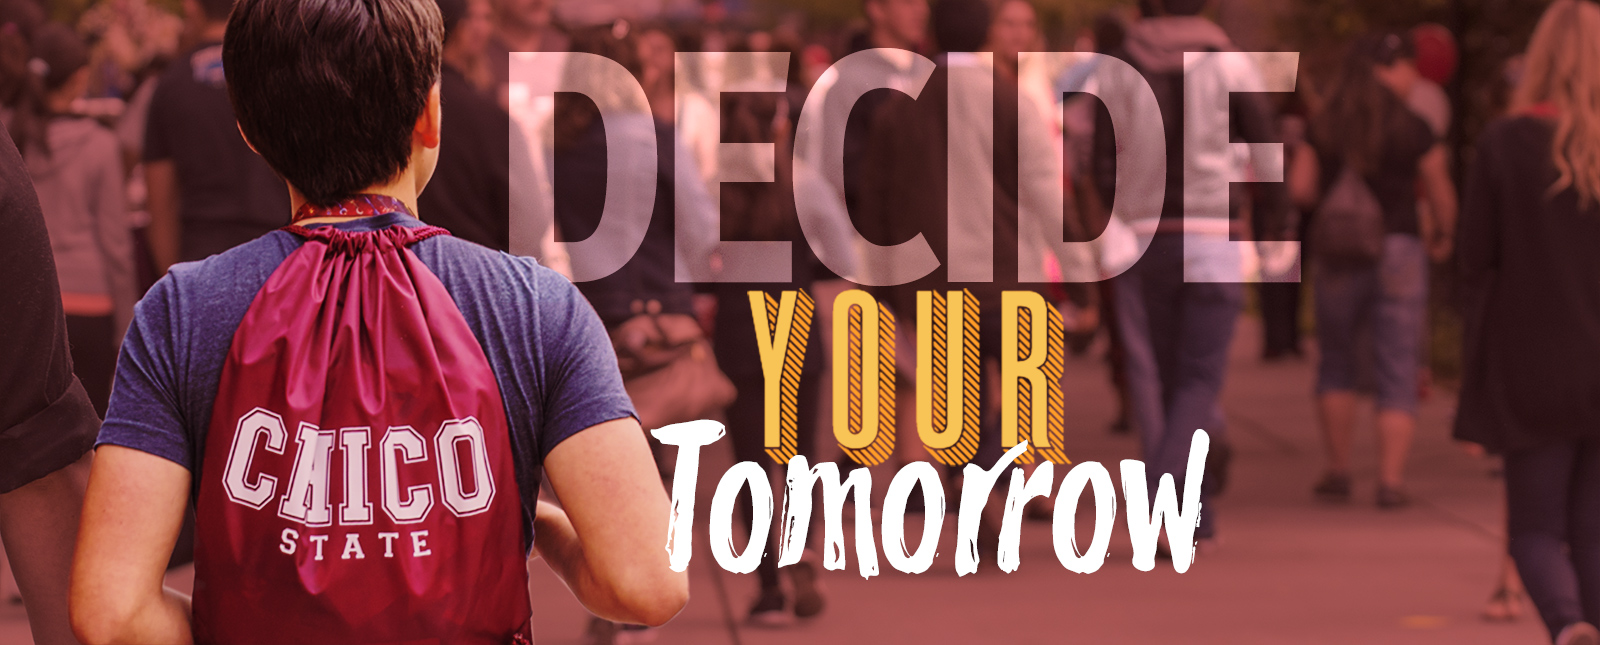 Decide your tomorrow